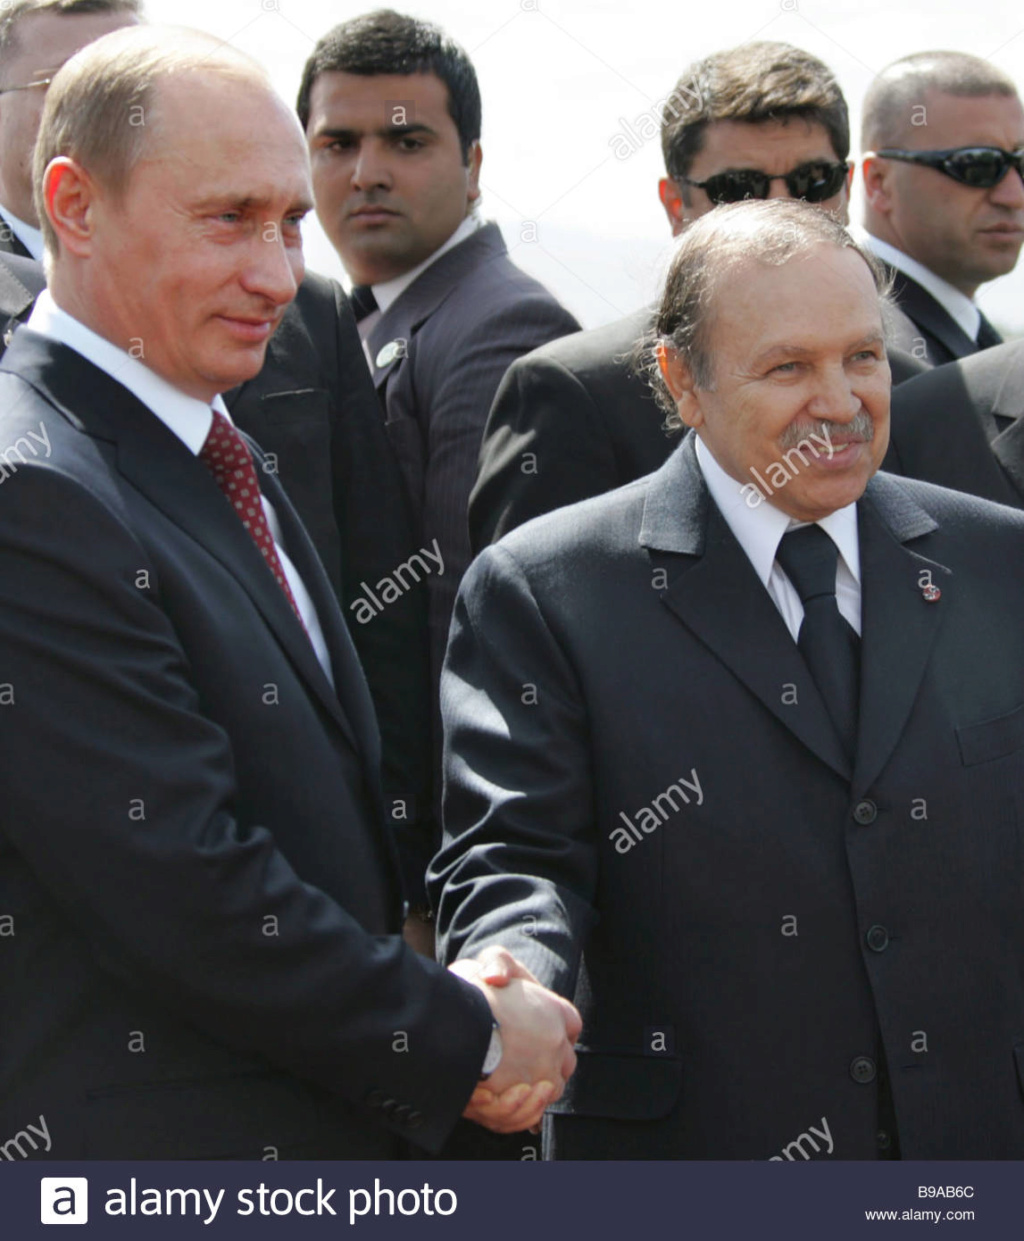 ¿Cuánto mide Abdelaziz Bouteflika? - Real height B9ab6c10